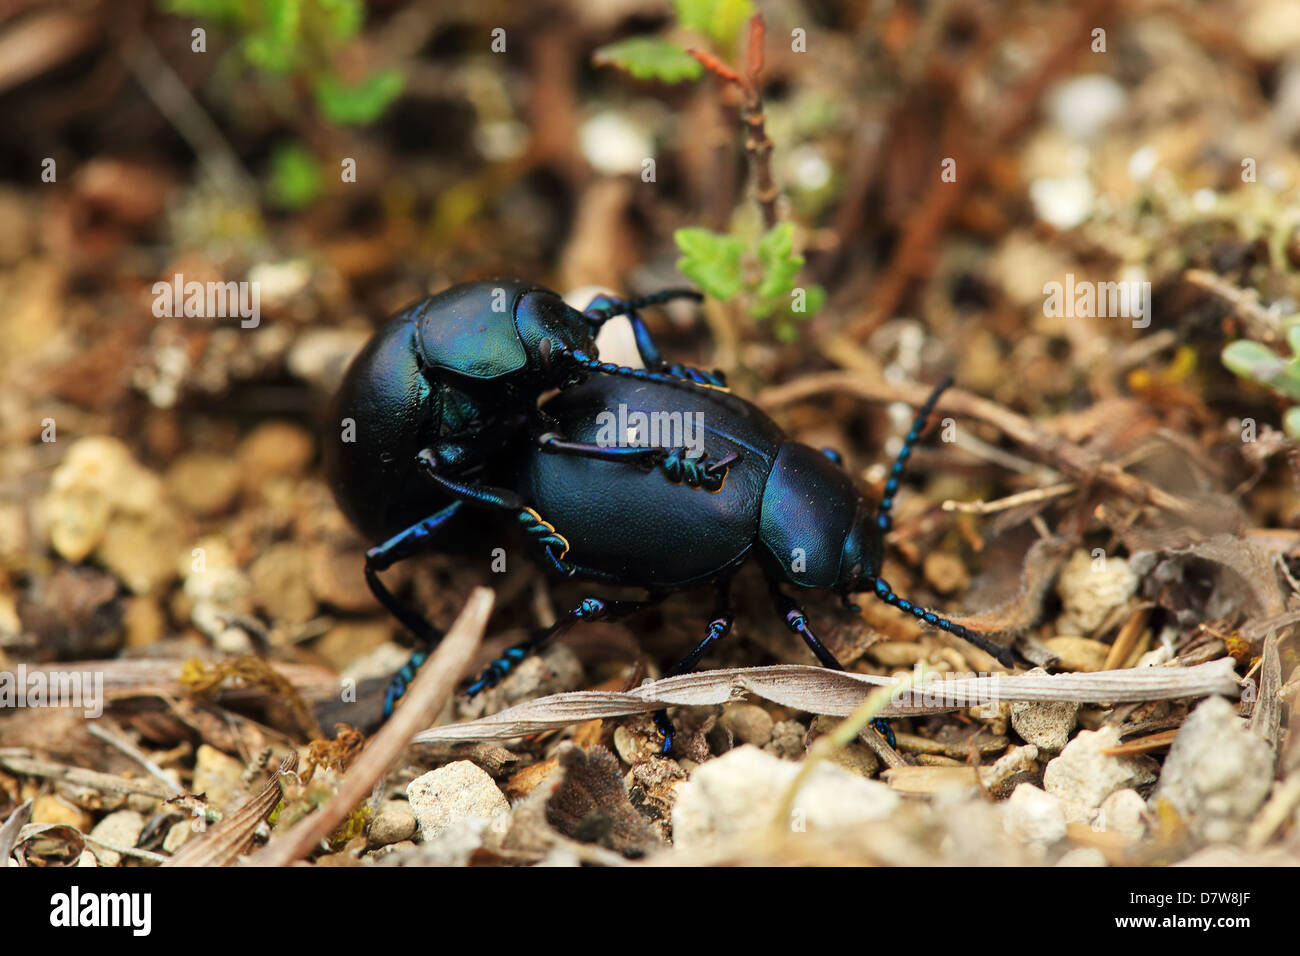 Dor-beetles. Mating beetles. Geotrupidae (Geotrupes stercorarius) Stock Photo